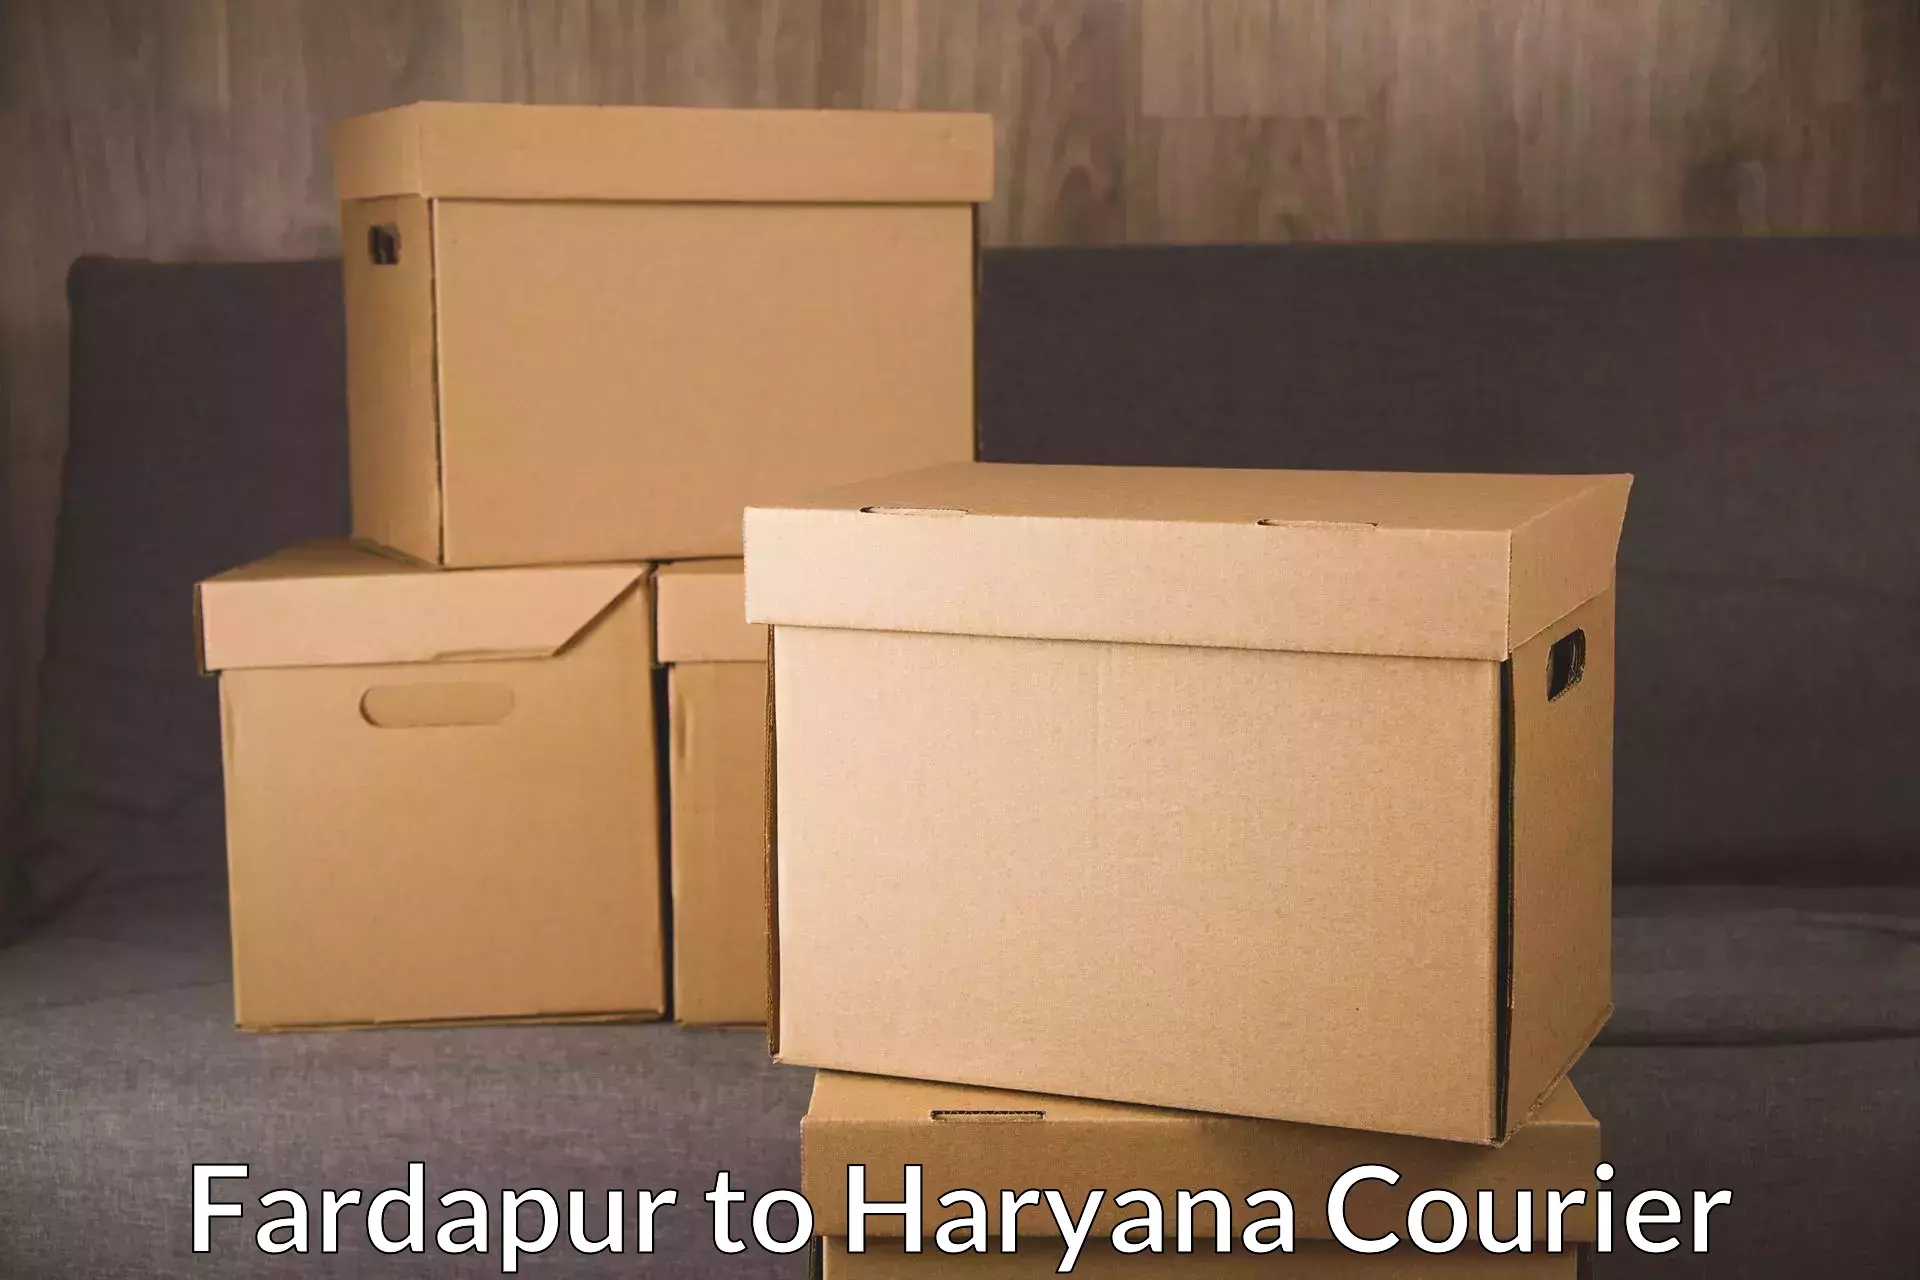 Courier service comparison Fardapur to Panipat